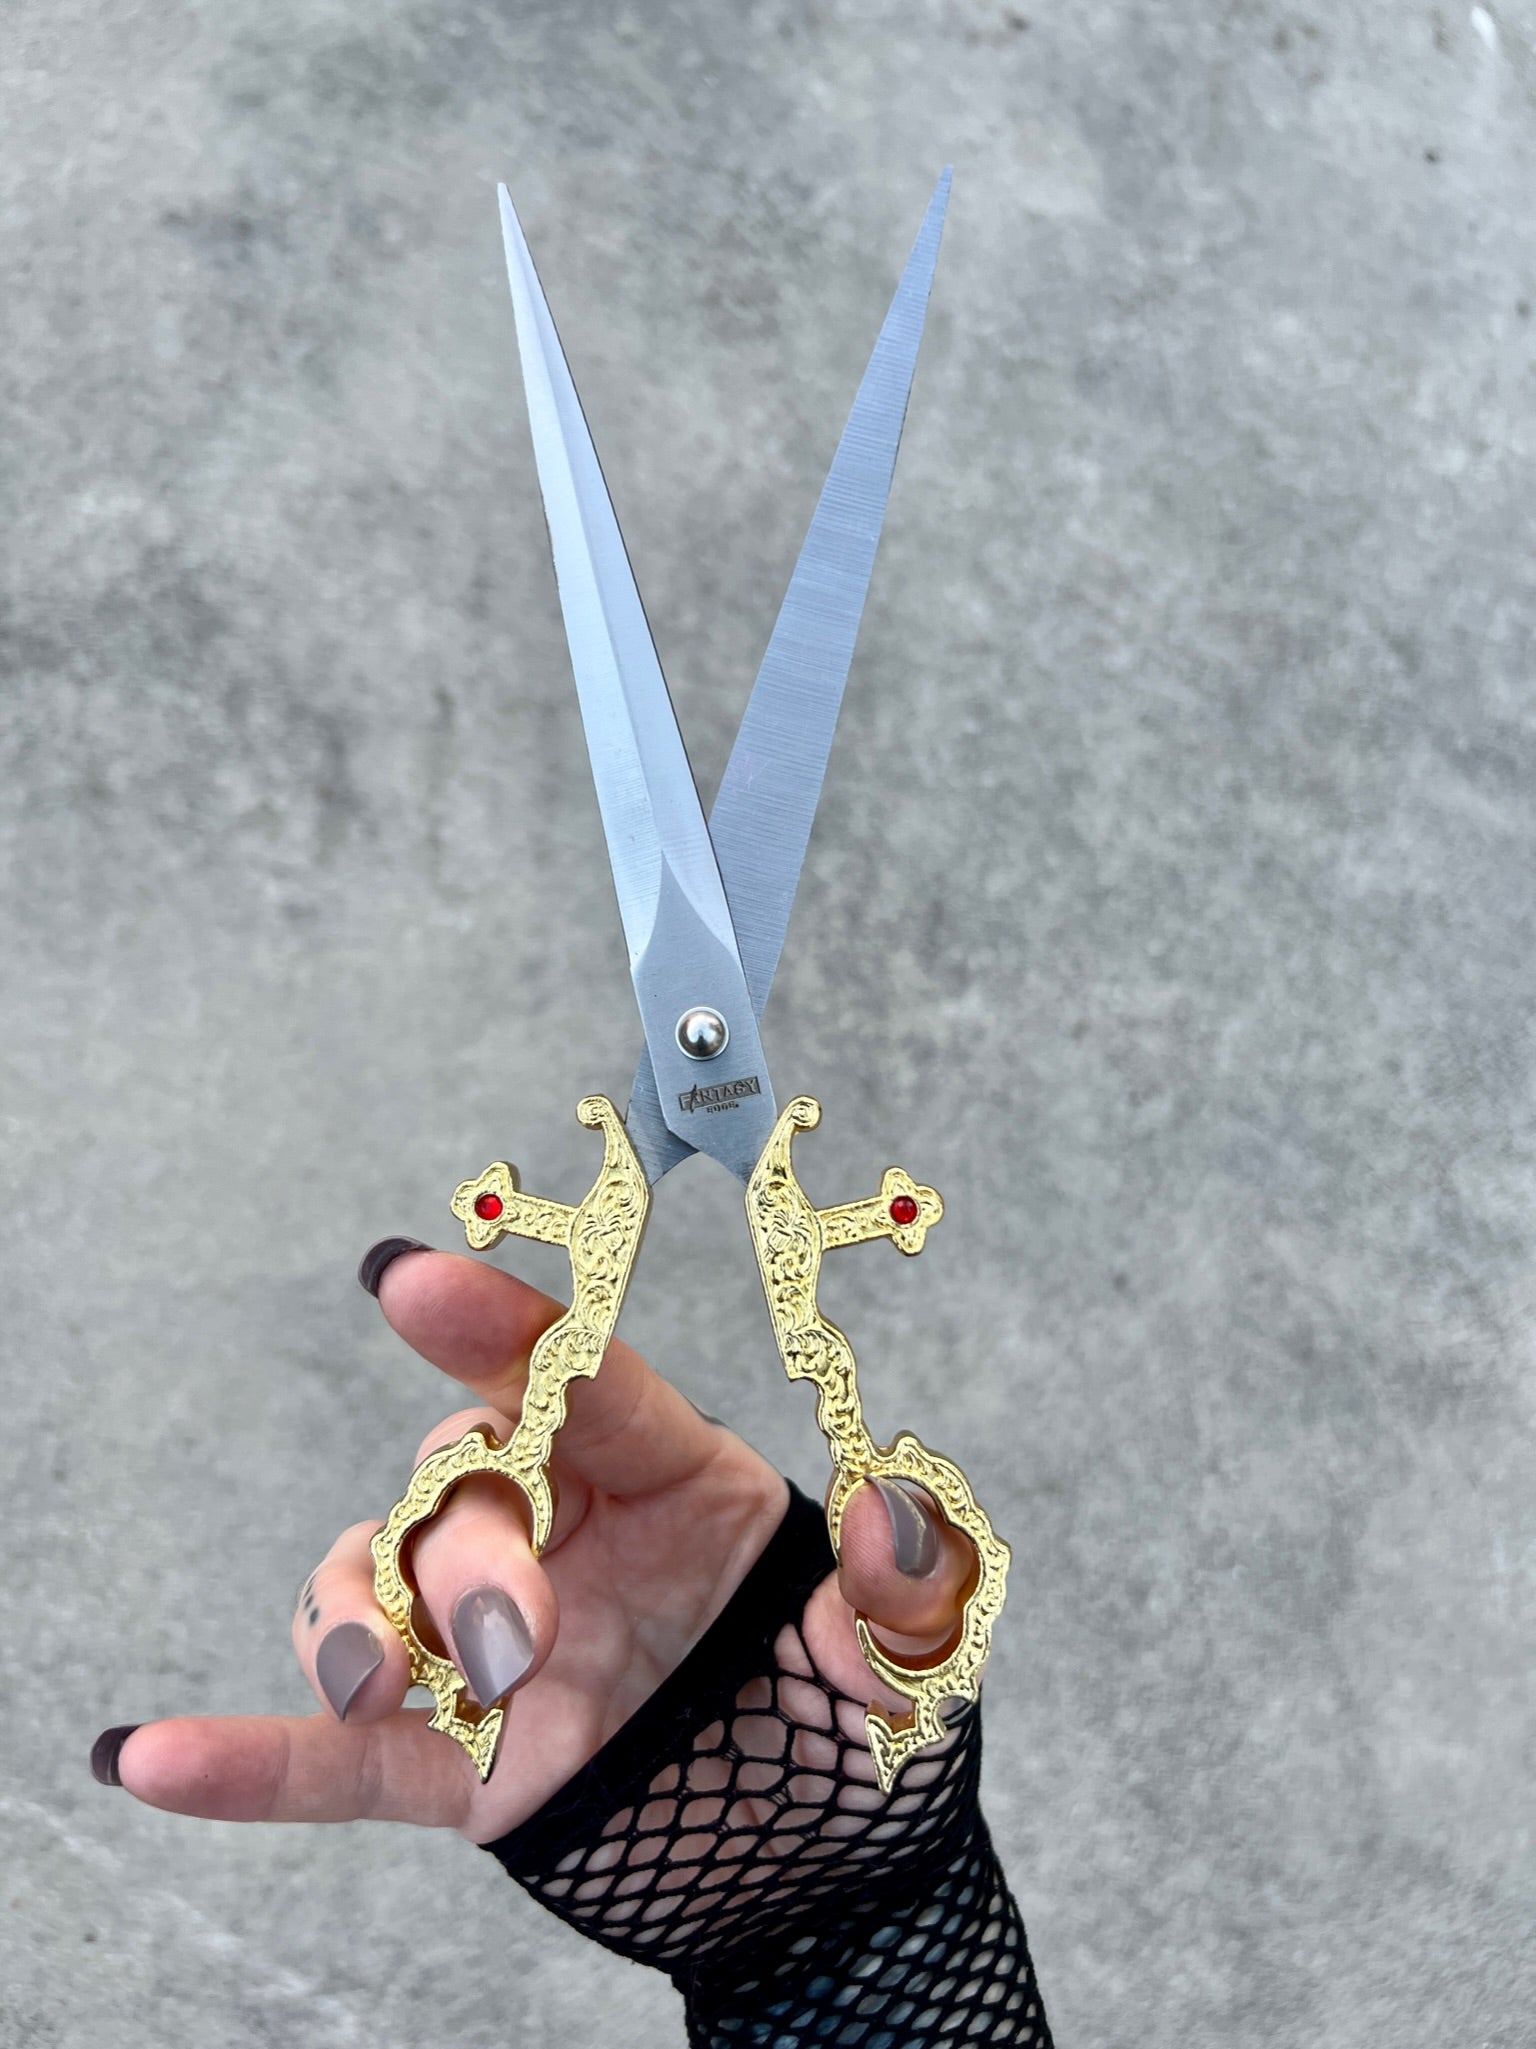 Renaissance Scissors  Swords medieval, Scissors, Knife